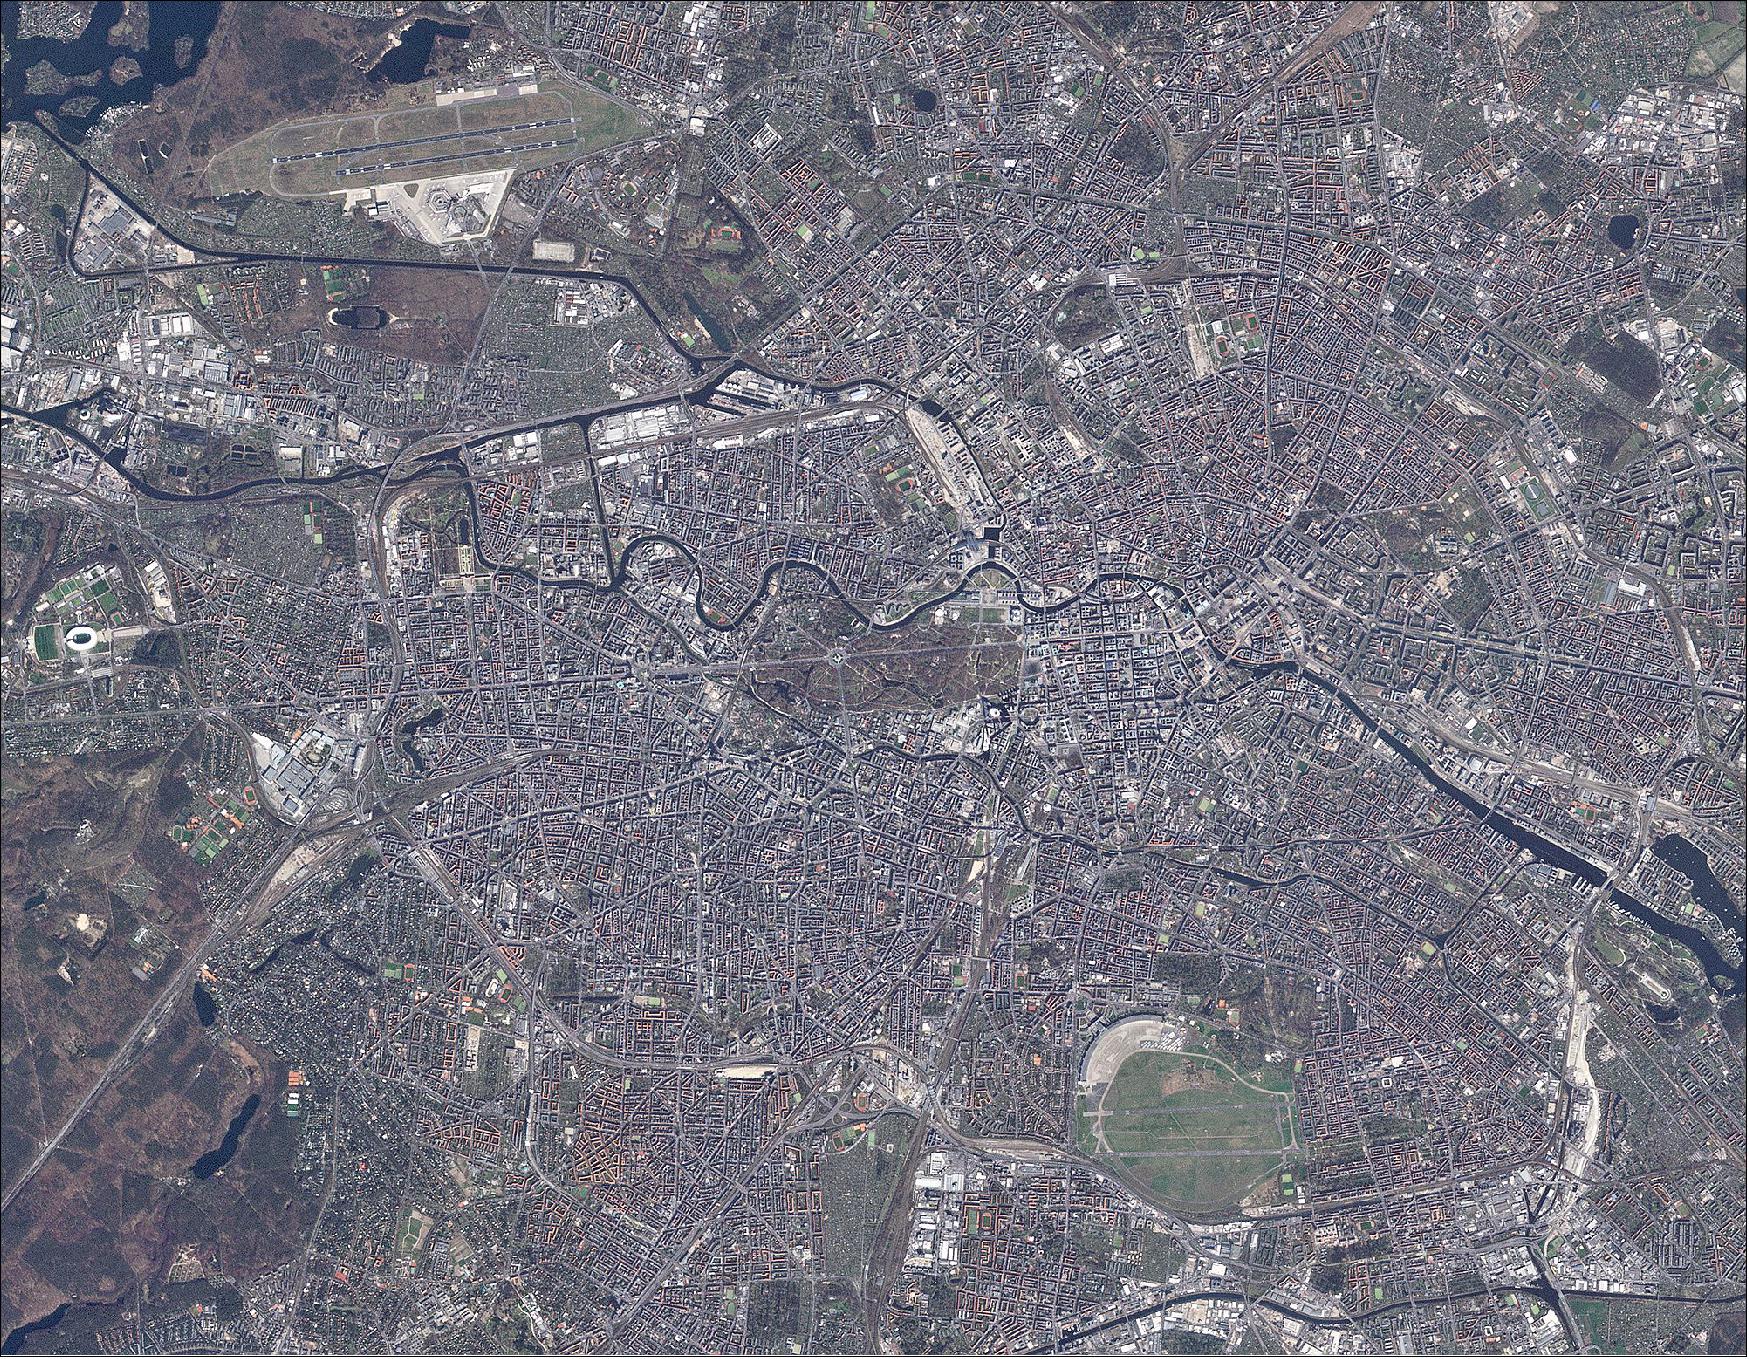 Figure 25: RapidEye last light image of Berlin, Germany (image credit: 2020, Planet Labs Inc.)